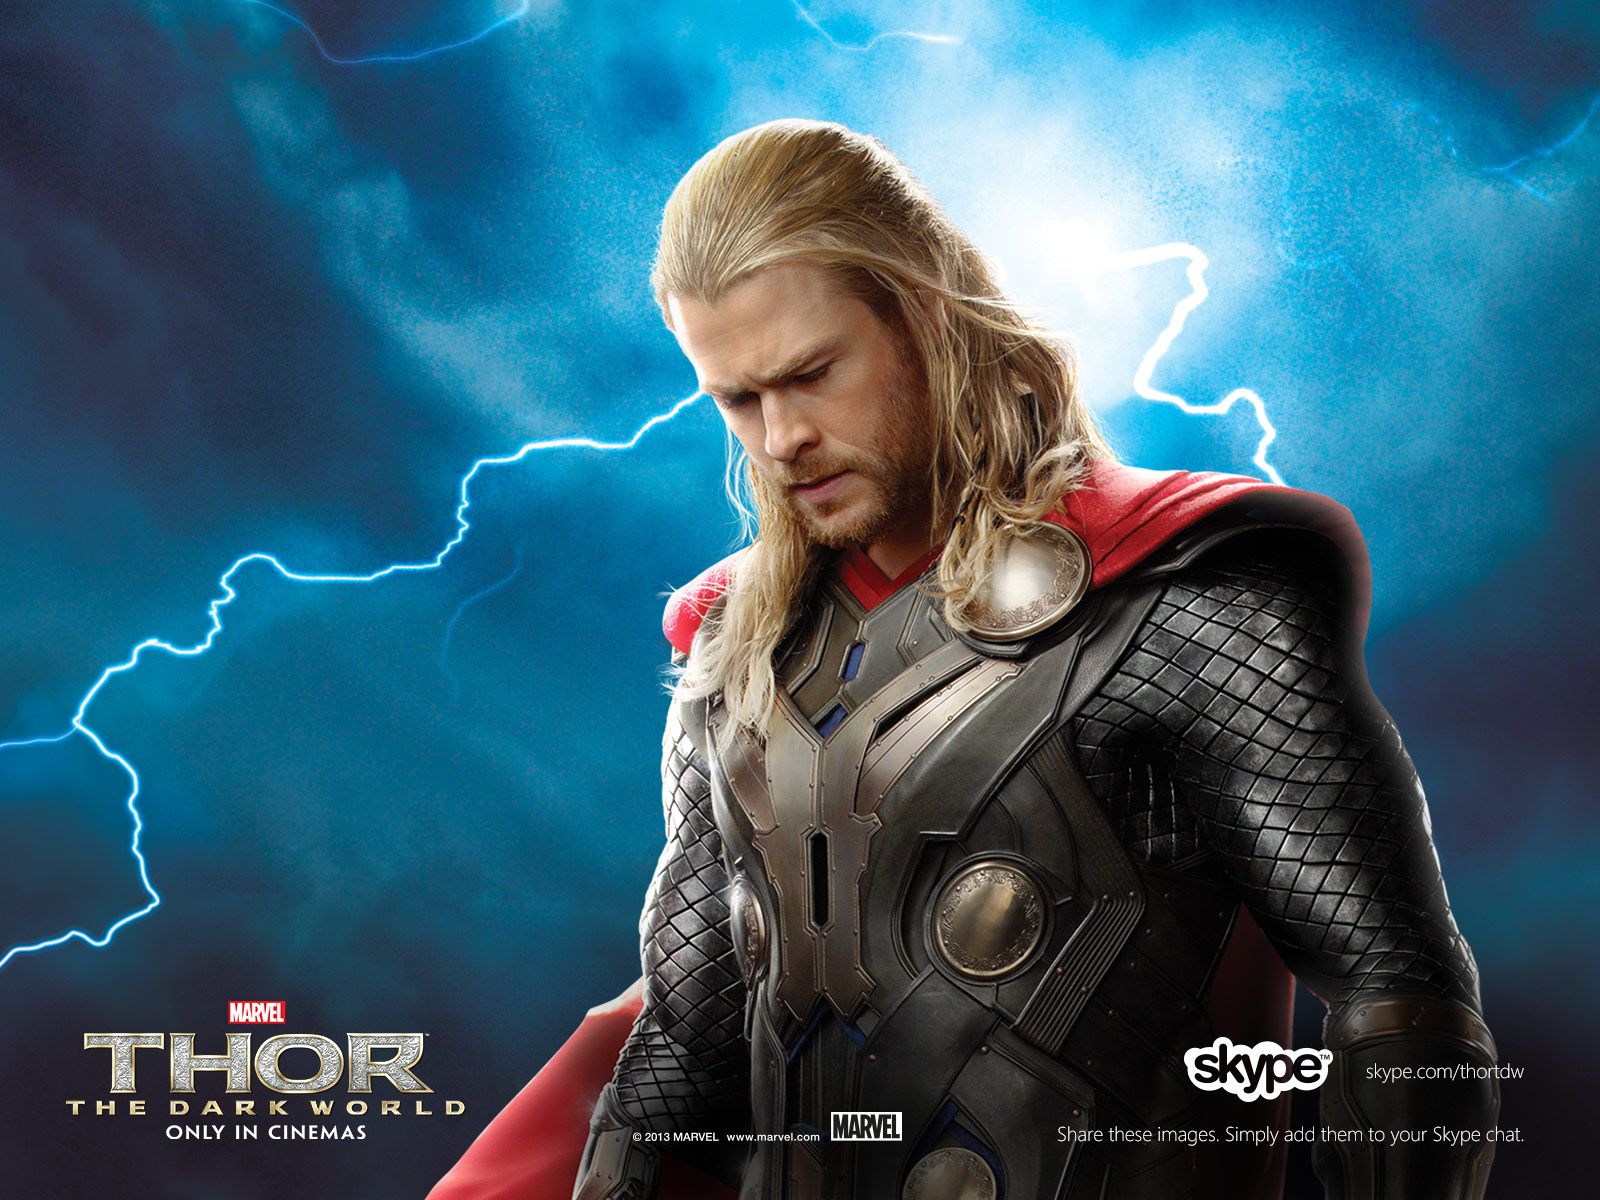 Thor the Dark World Skype Promo 2